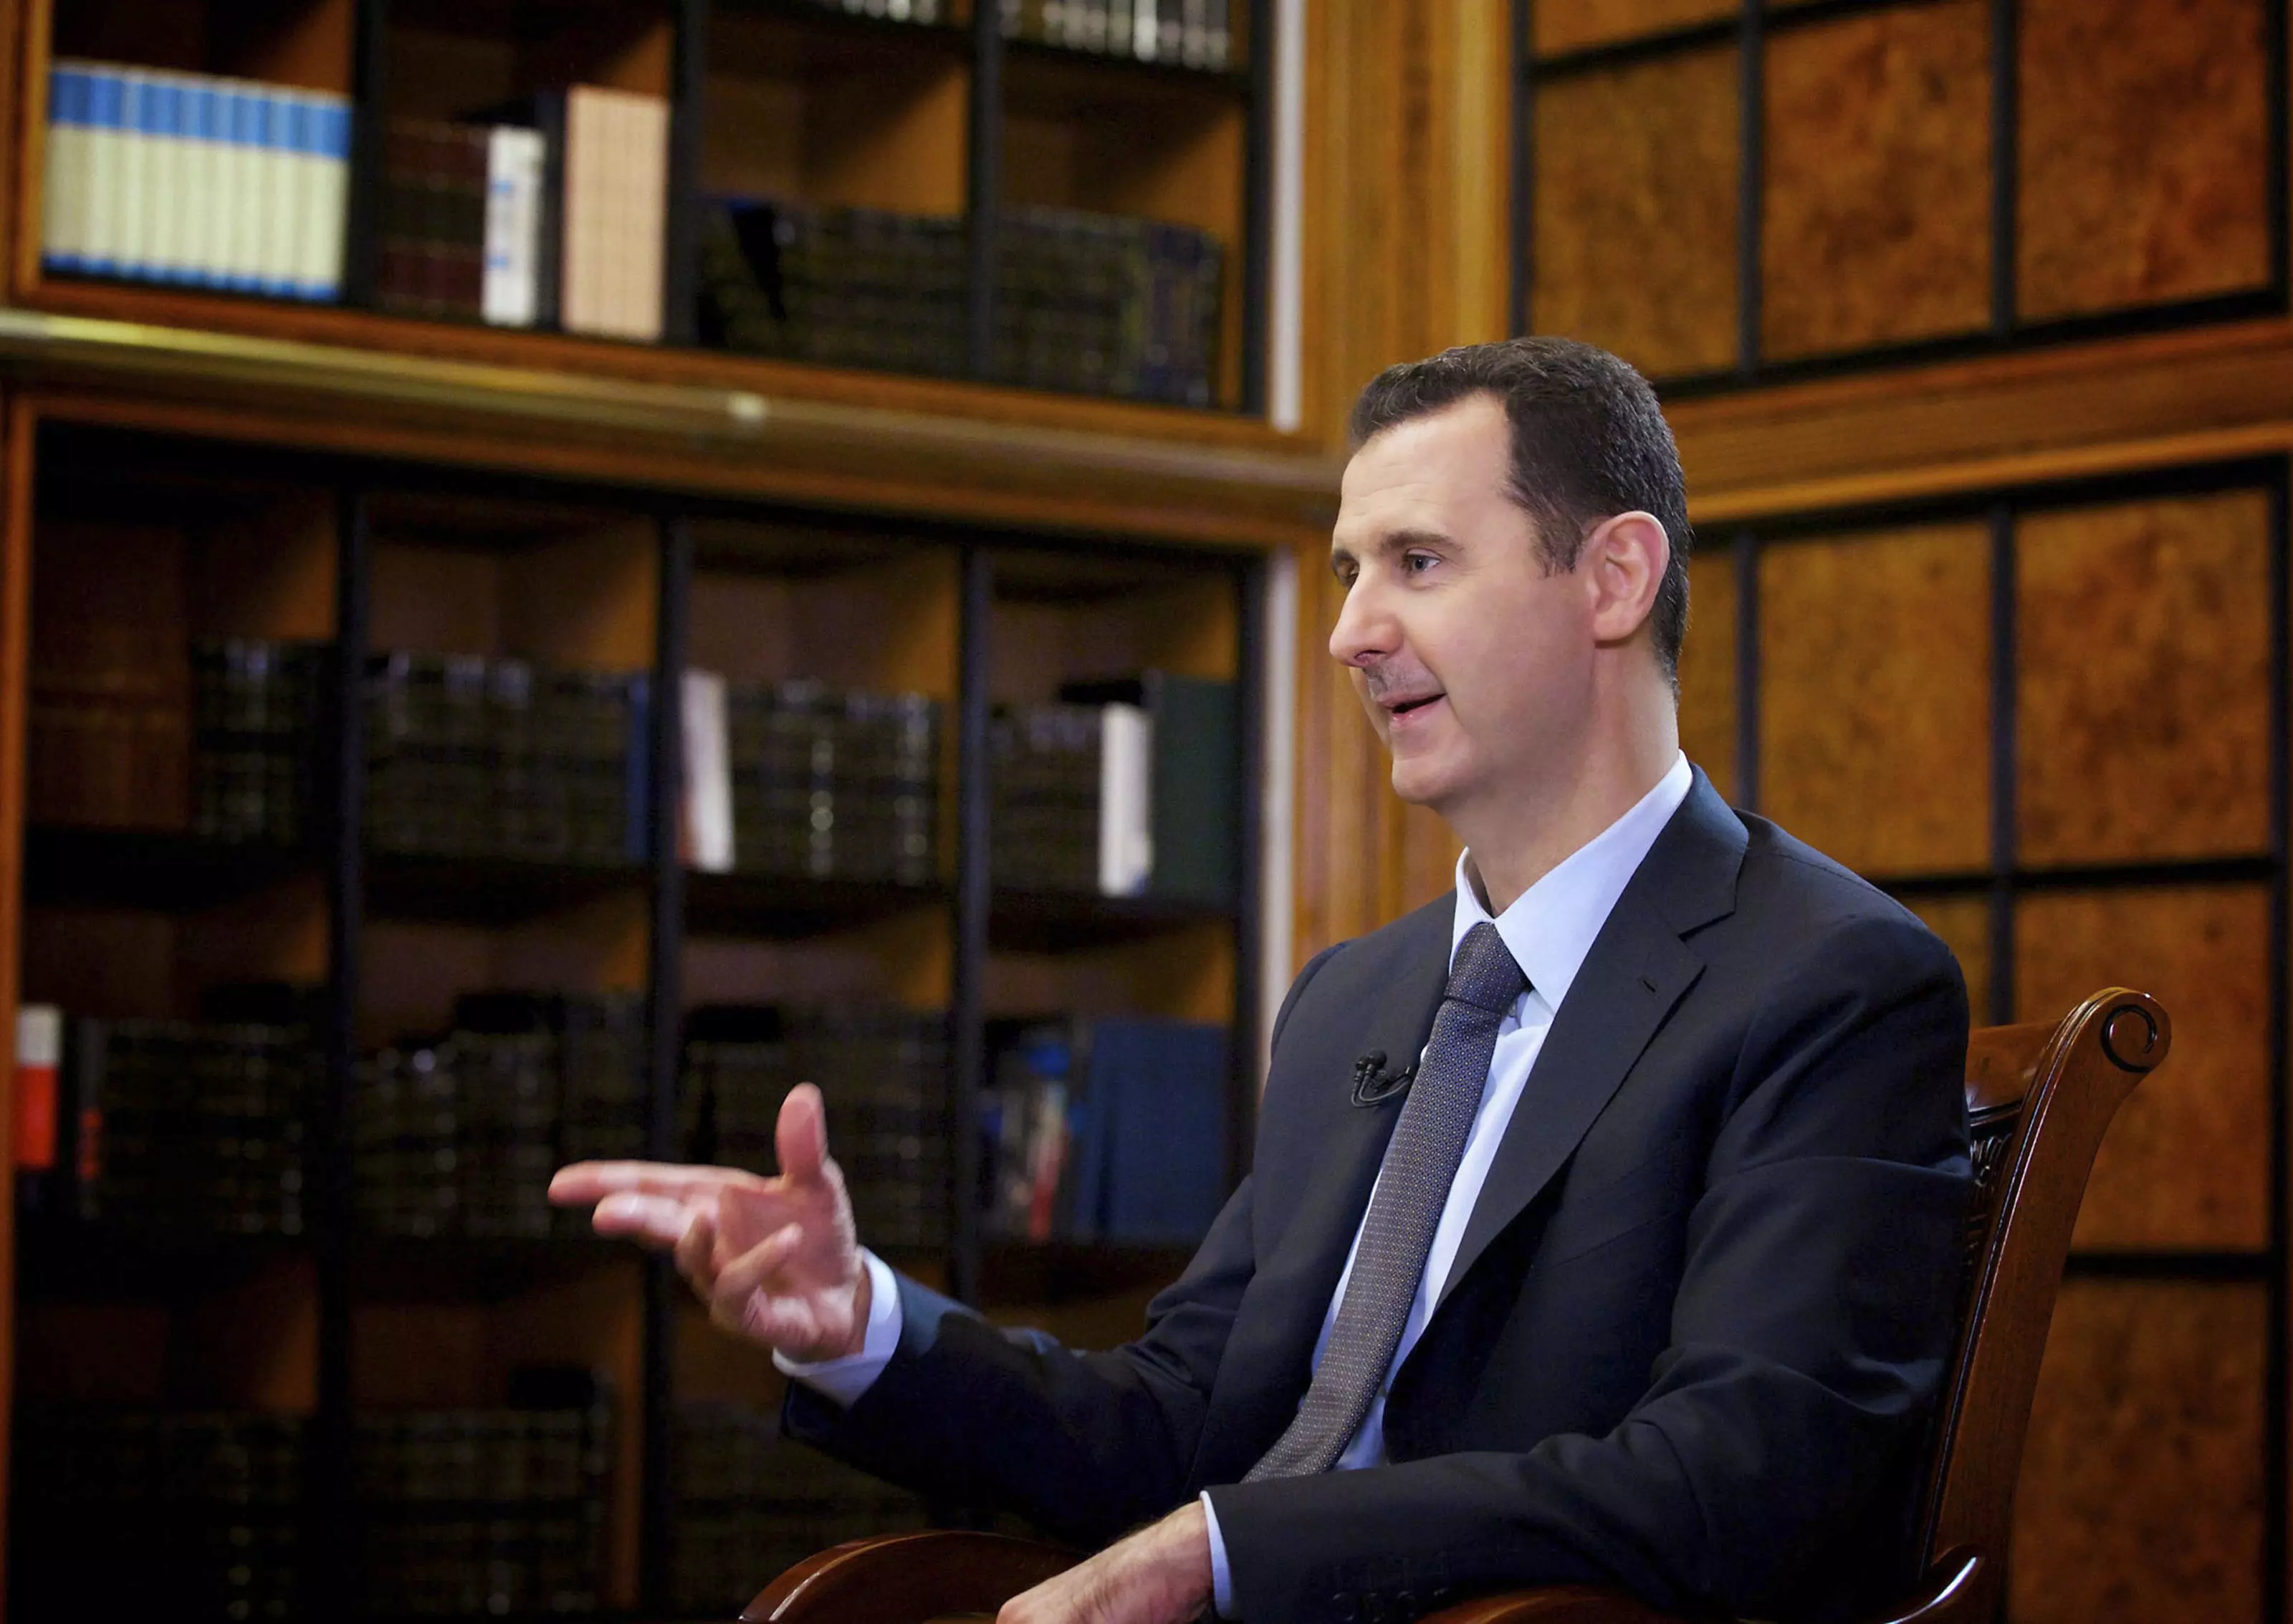 נשיא סוריה, אסד